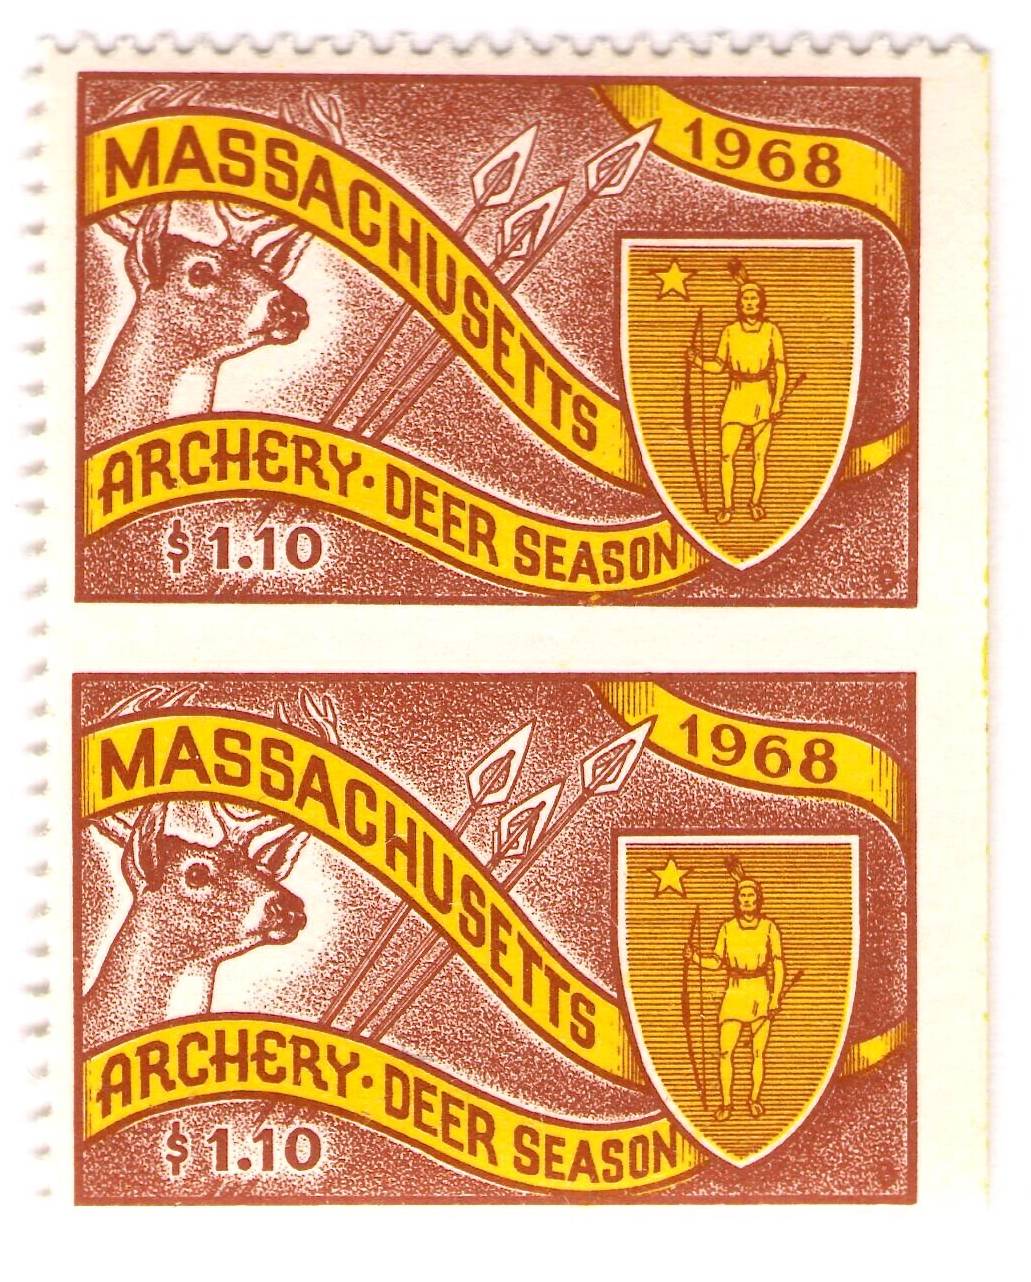 1968 Massachusetts Archer Deer Imperforate Between Pair